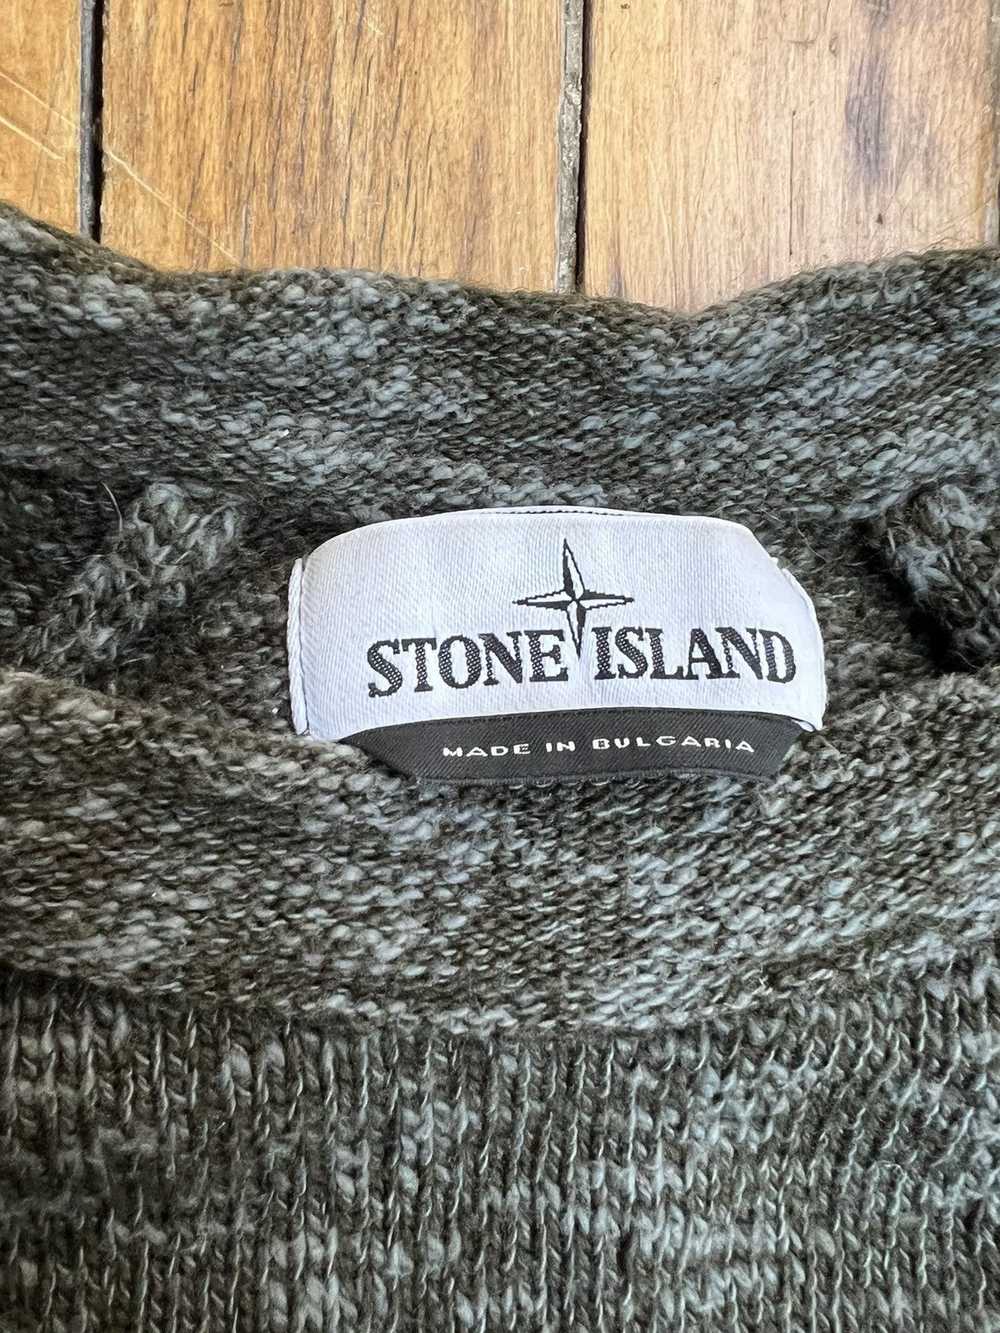 Stone Island Stone Island Wool Sweater - image 2